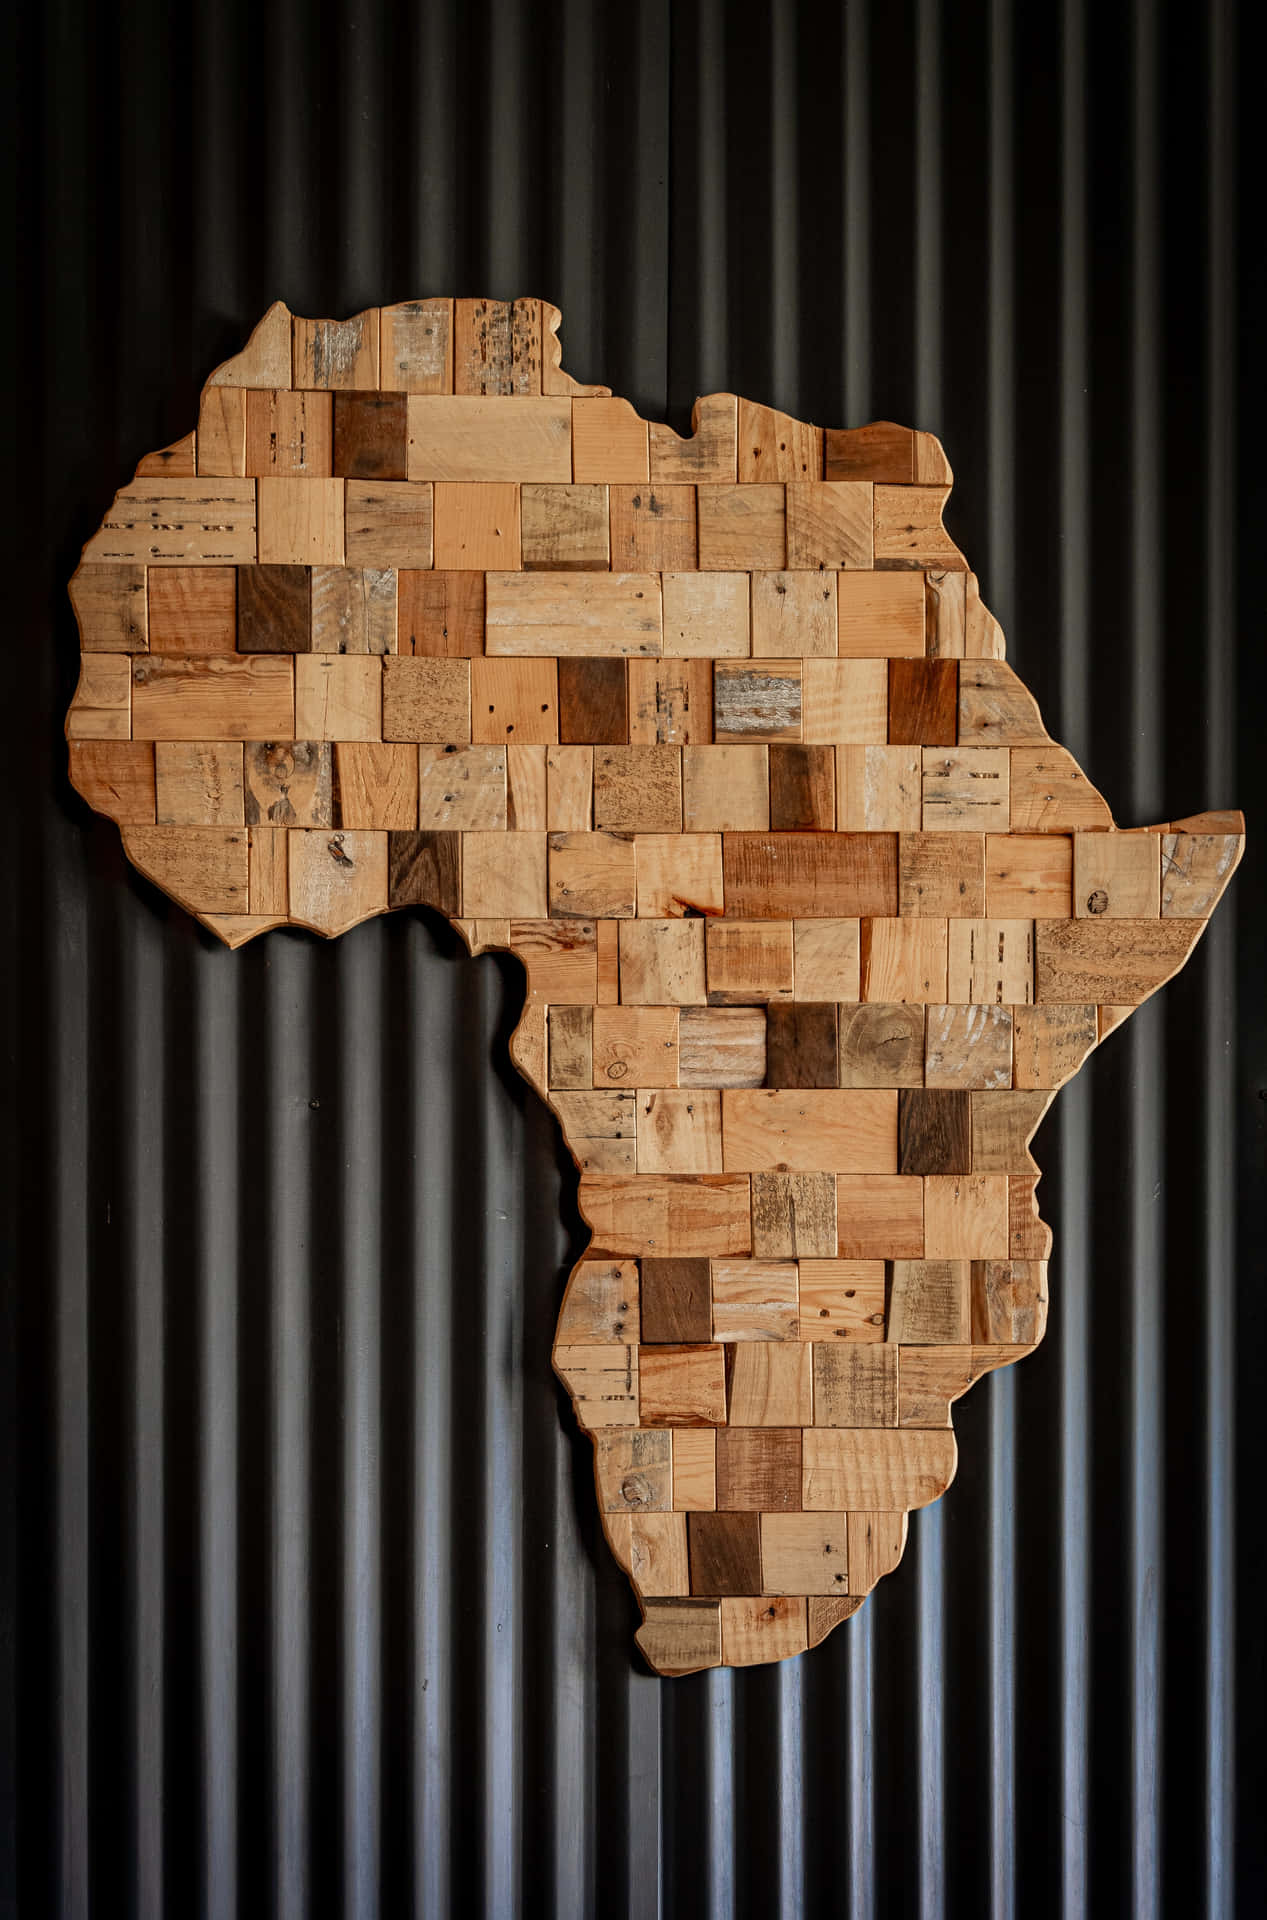 Africa Background